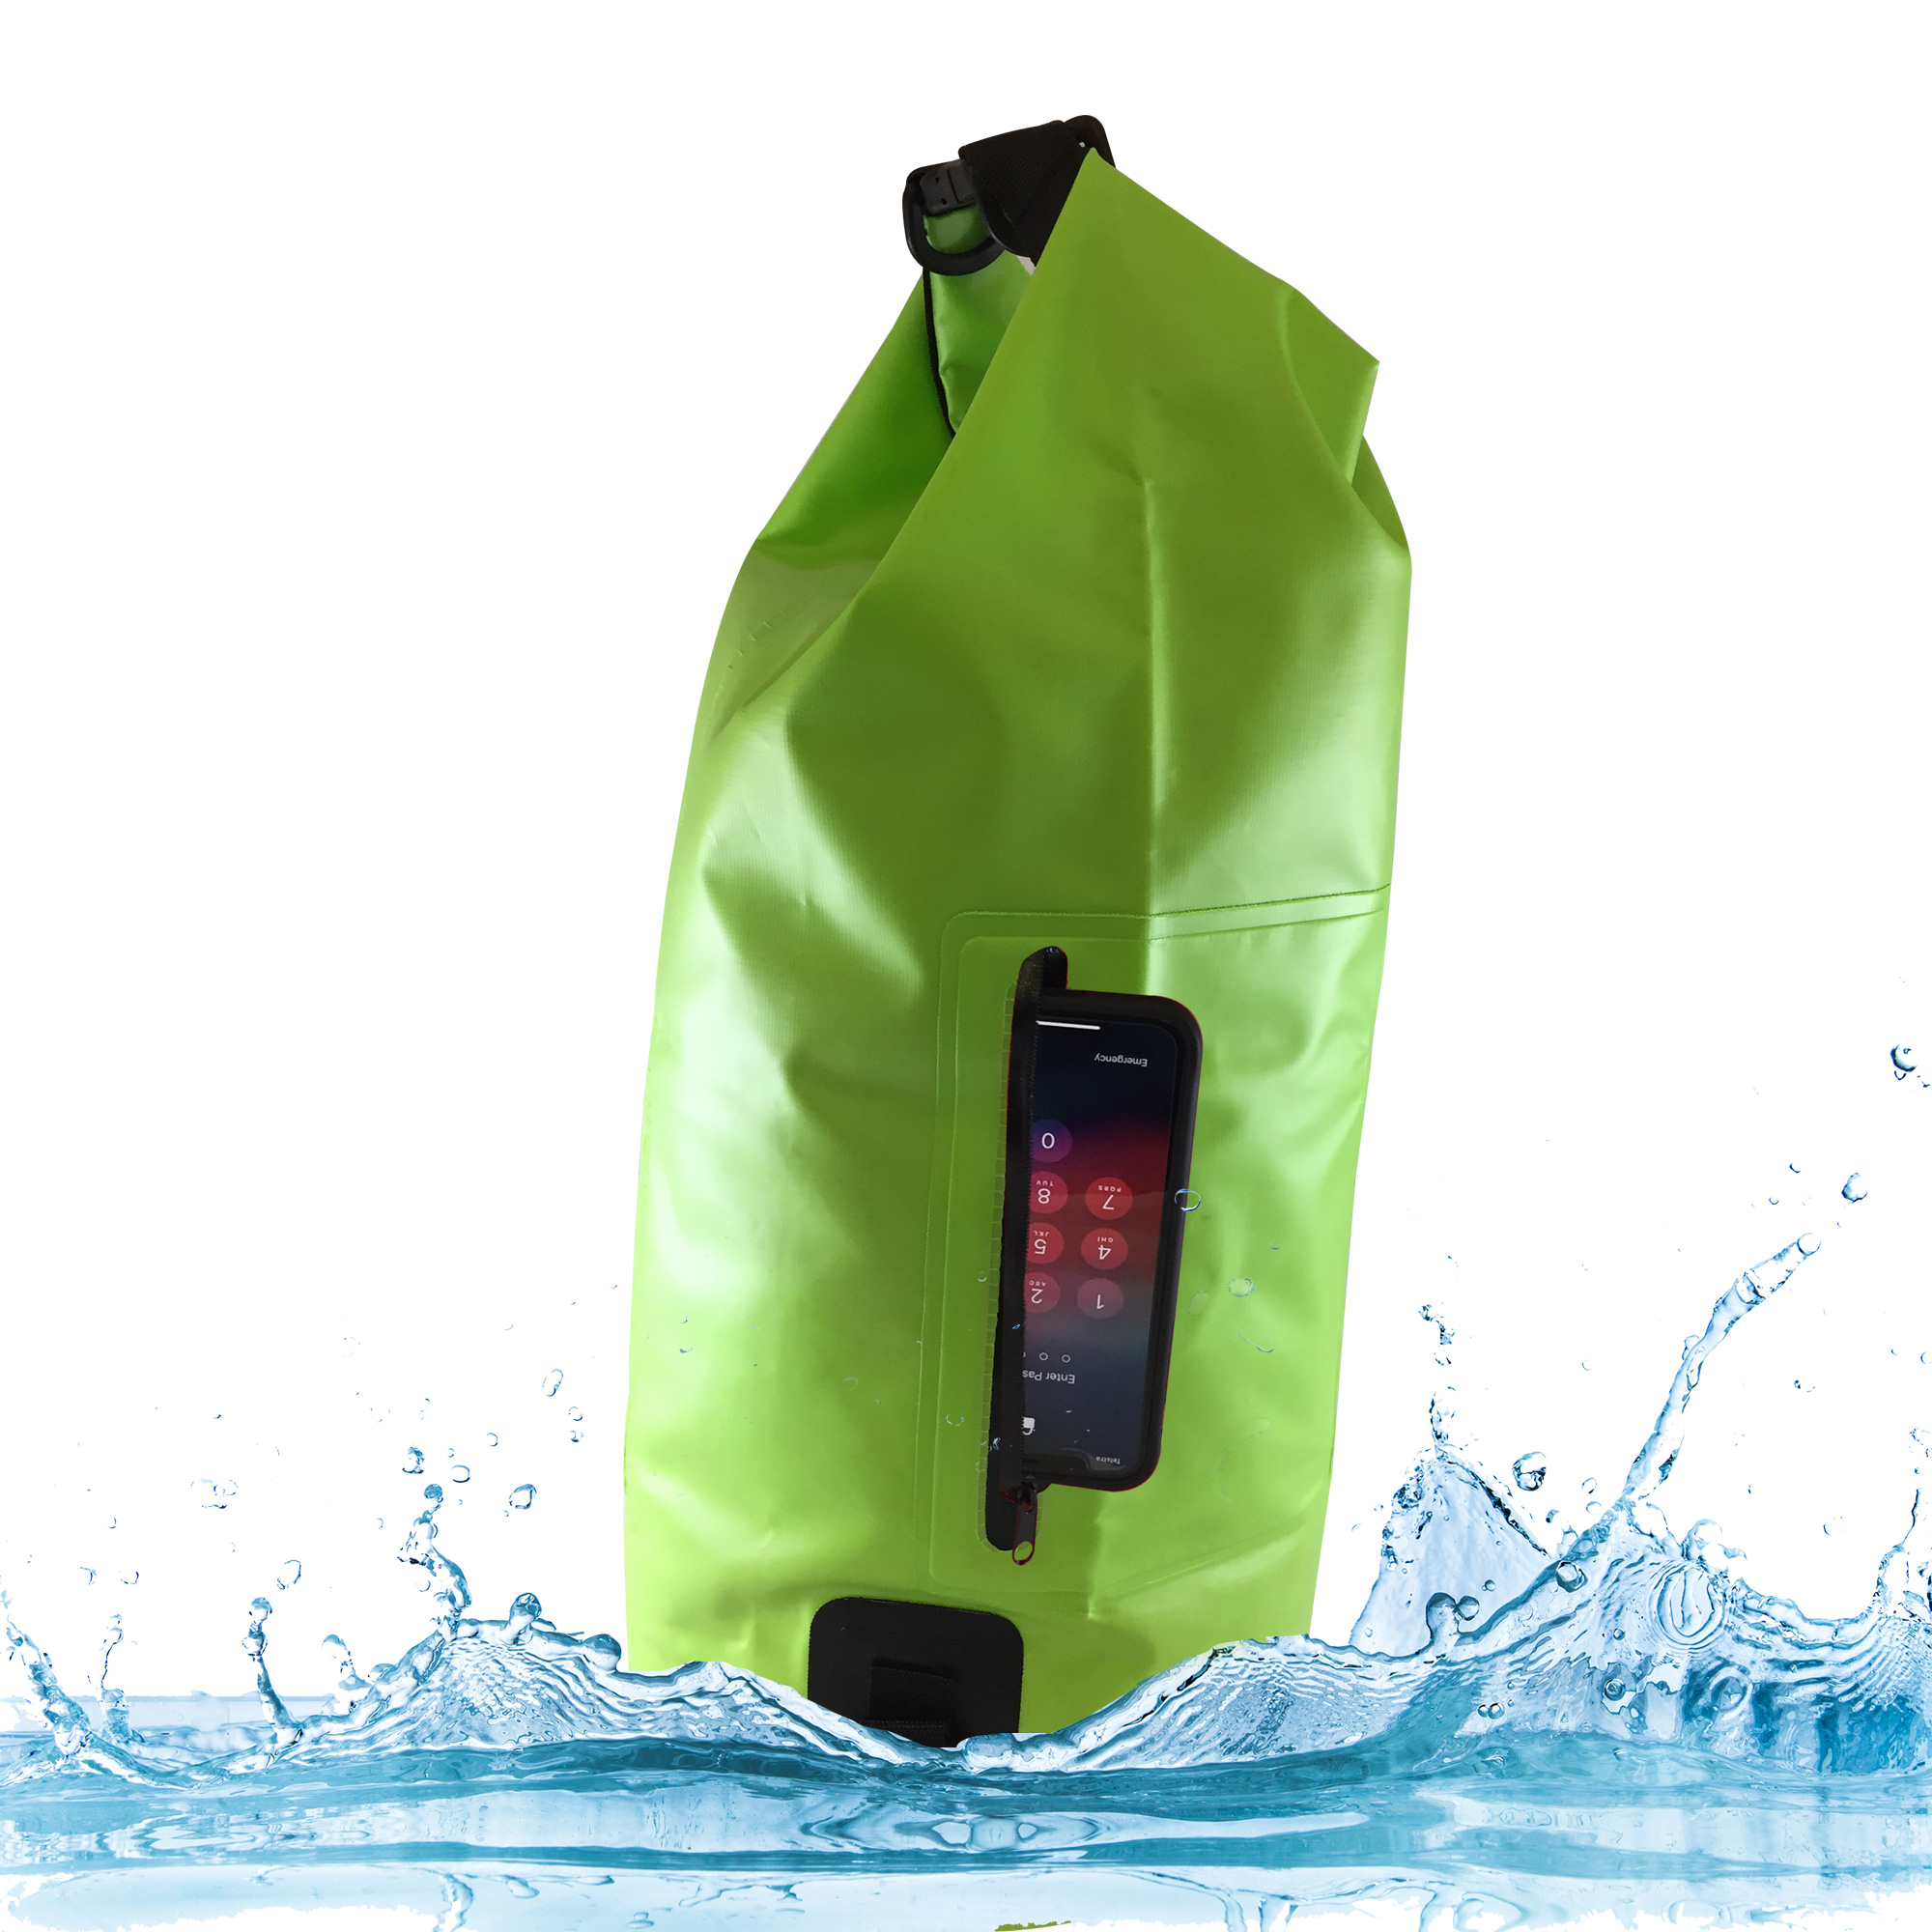 waterproof-beach-bag-australia